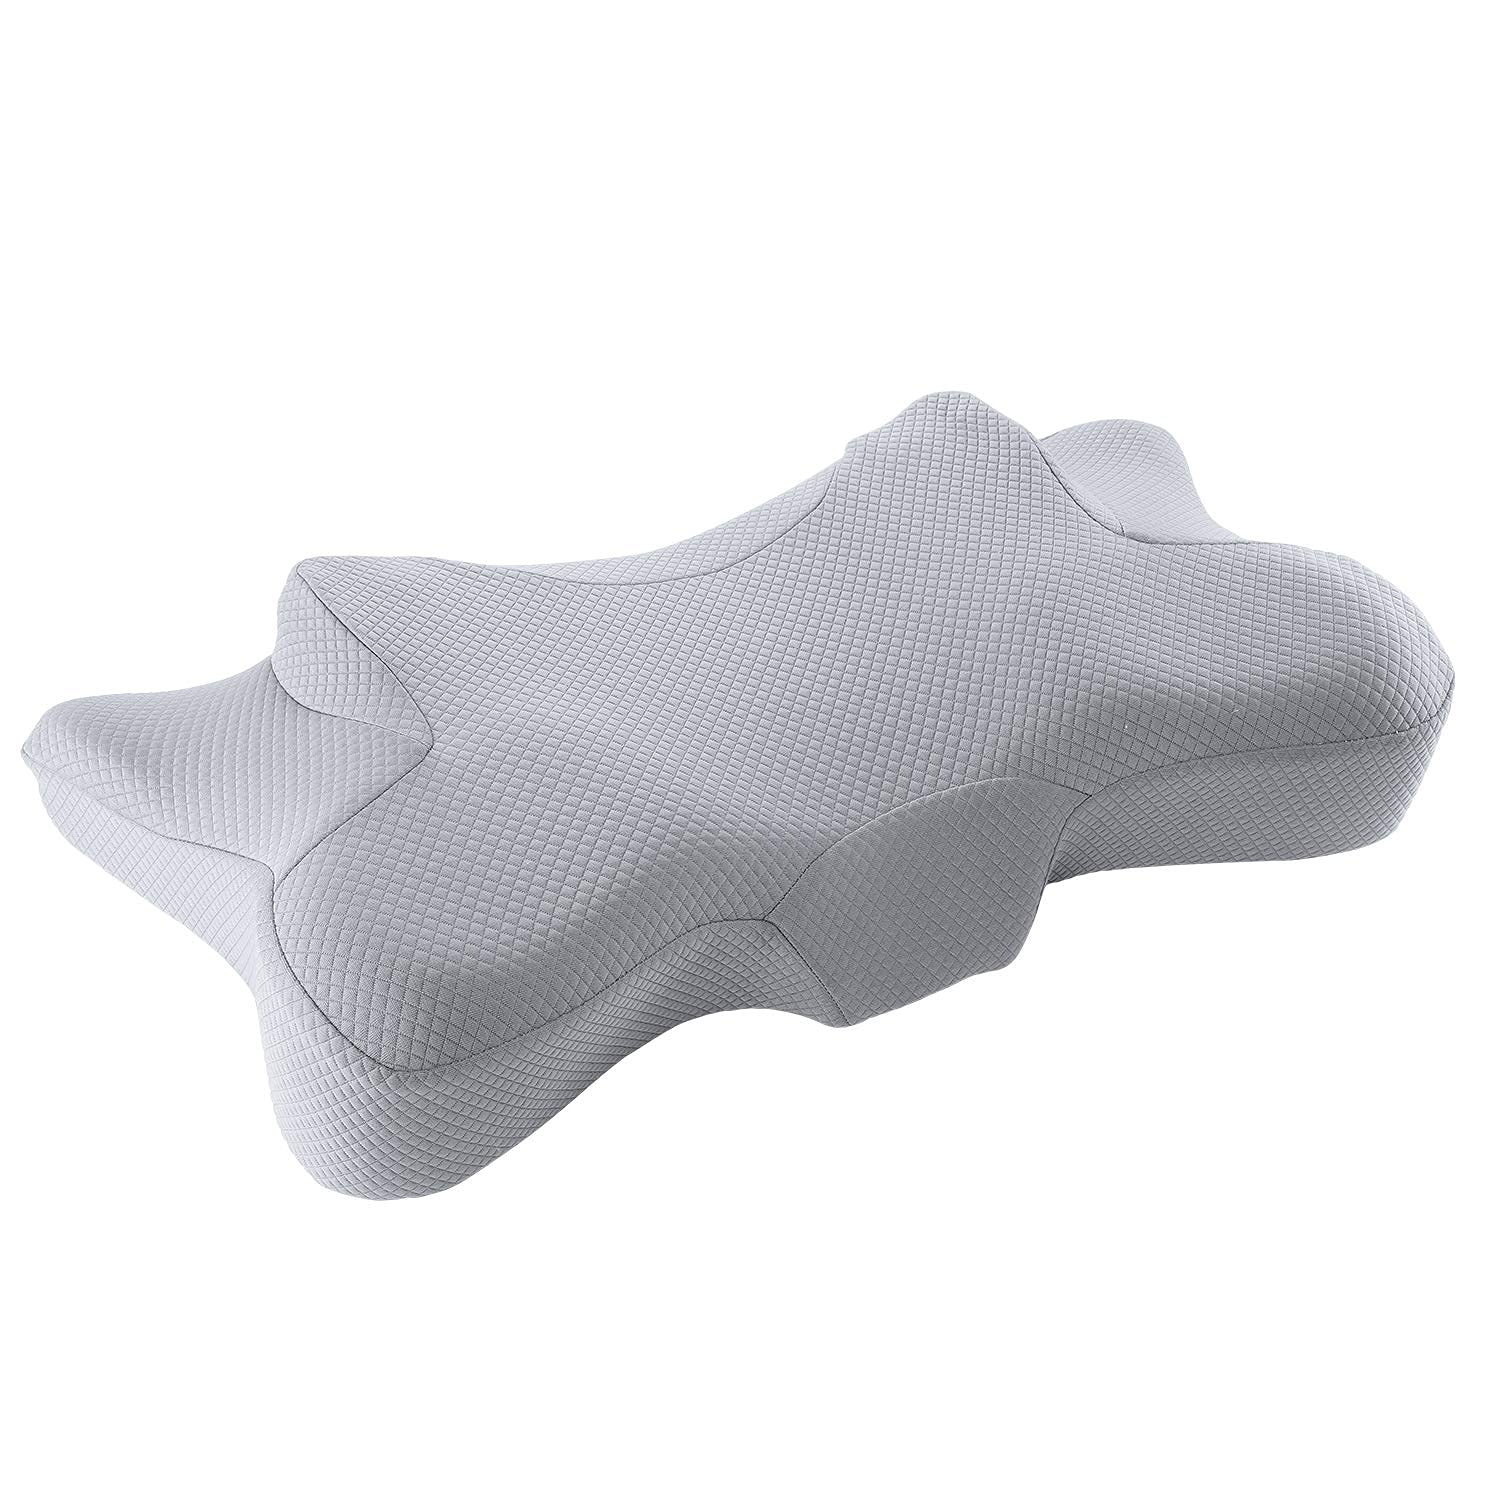 Cervical Pillow for Neck Pain, BedStory Memory Foam Neck Pillow